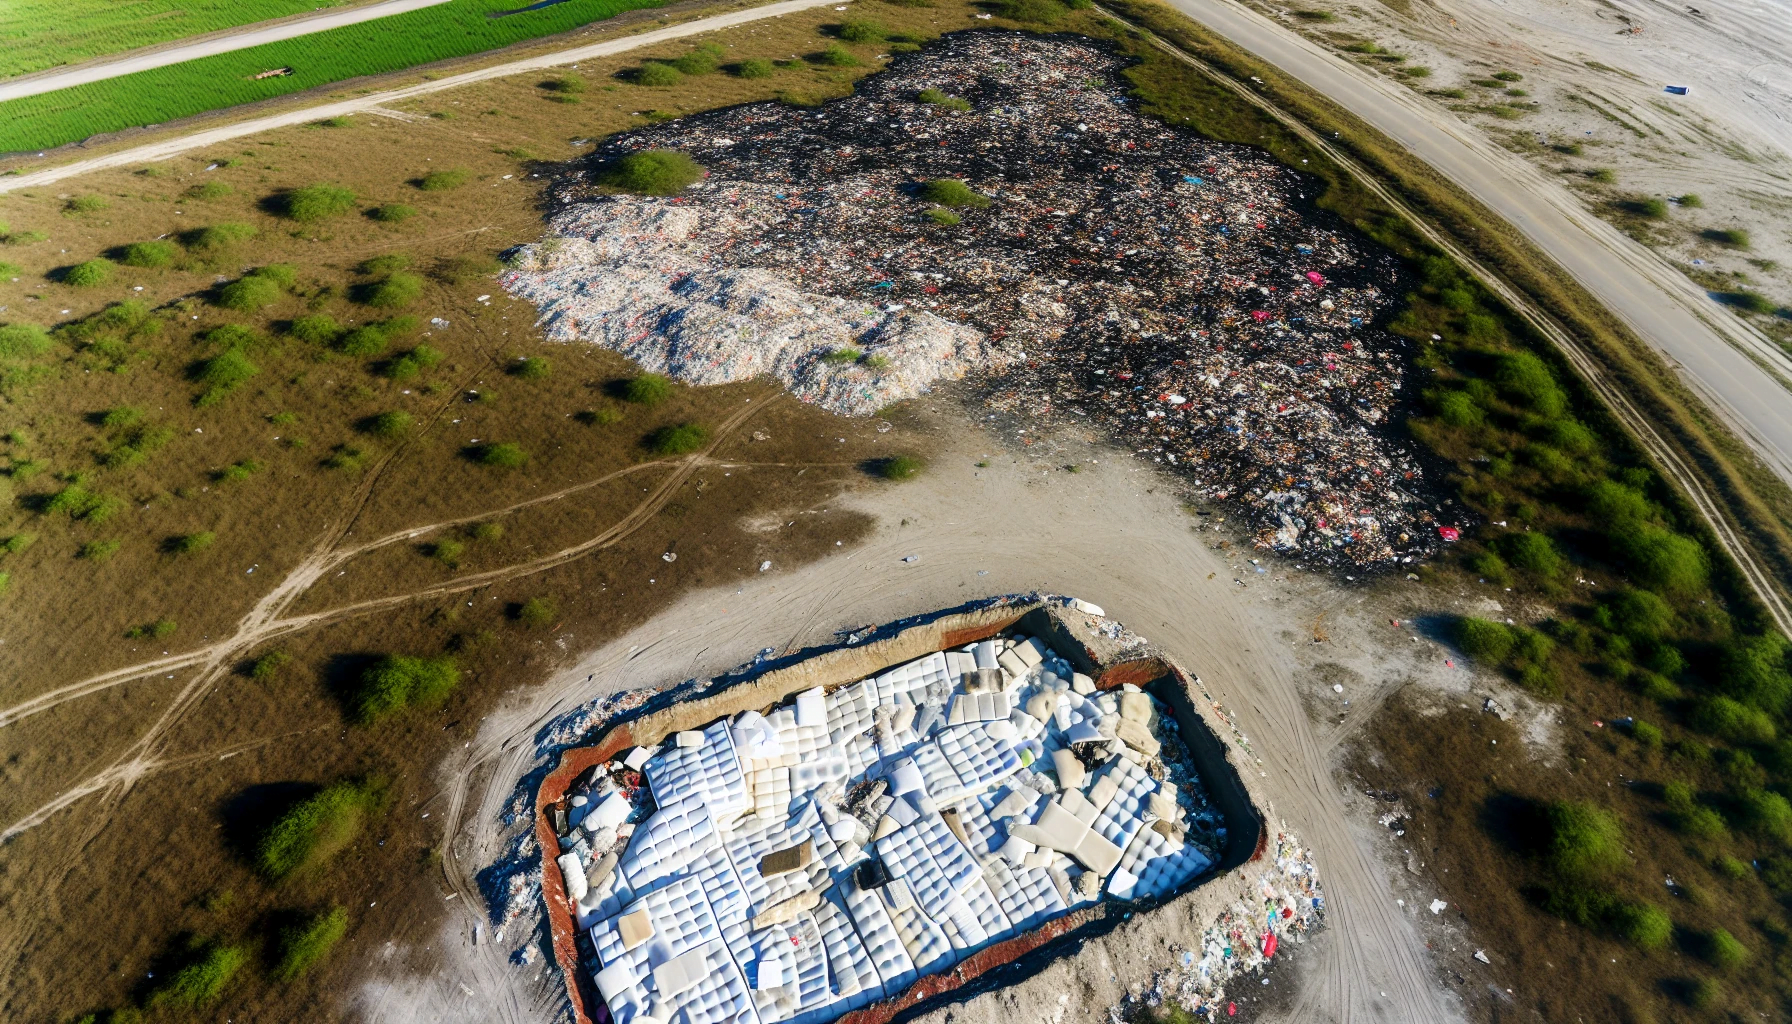 Foam mattress topper in a landfill